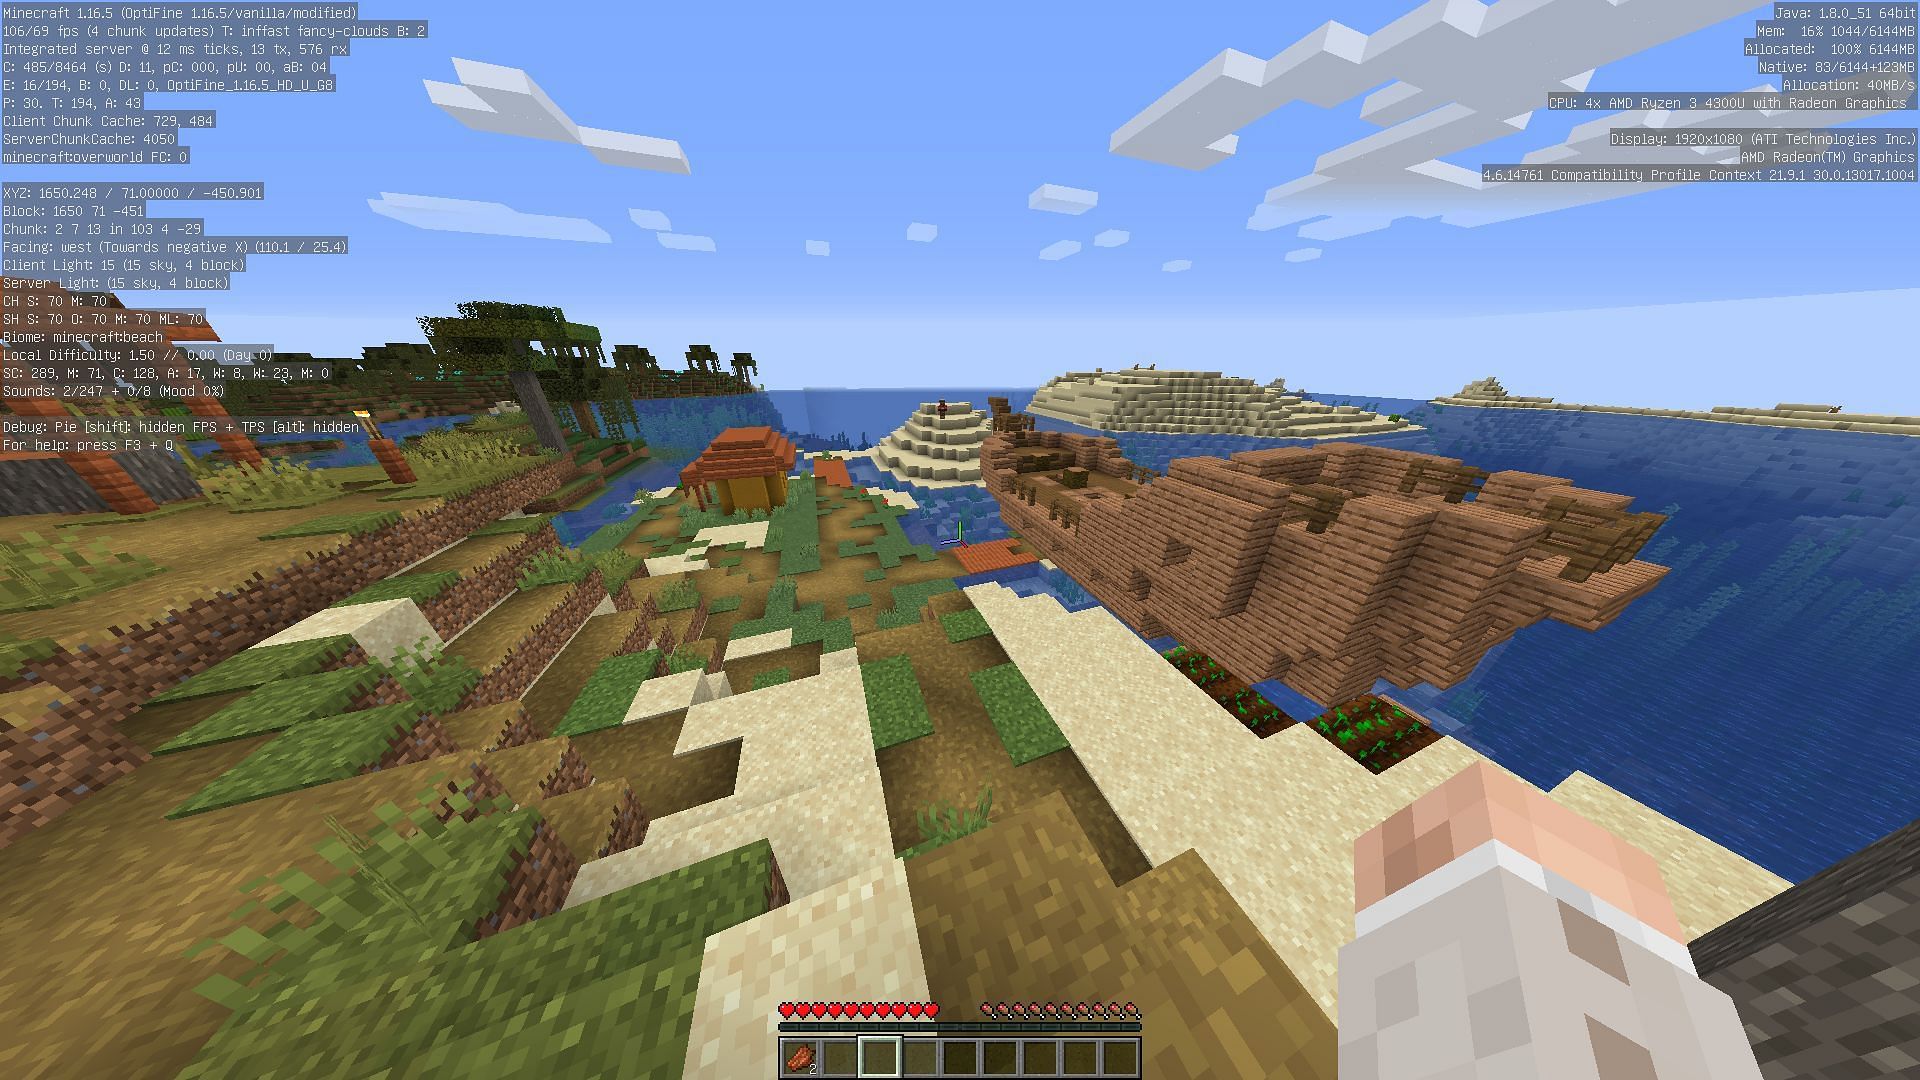 This seed has a shipwreck next to a village at spawn (Image via u/otisgaming on Reddit)